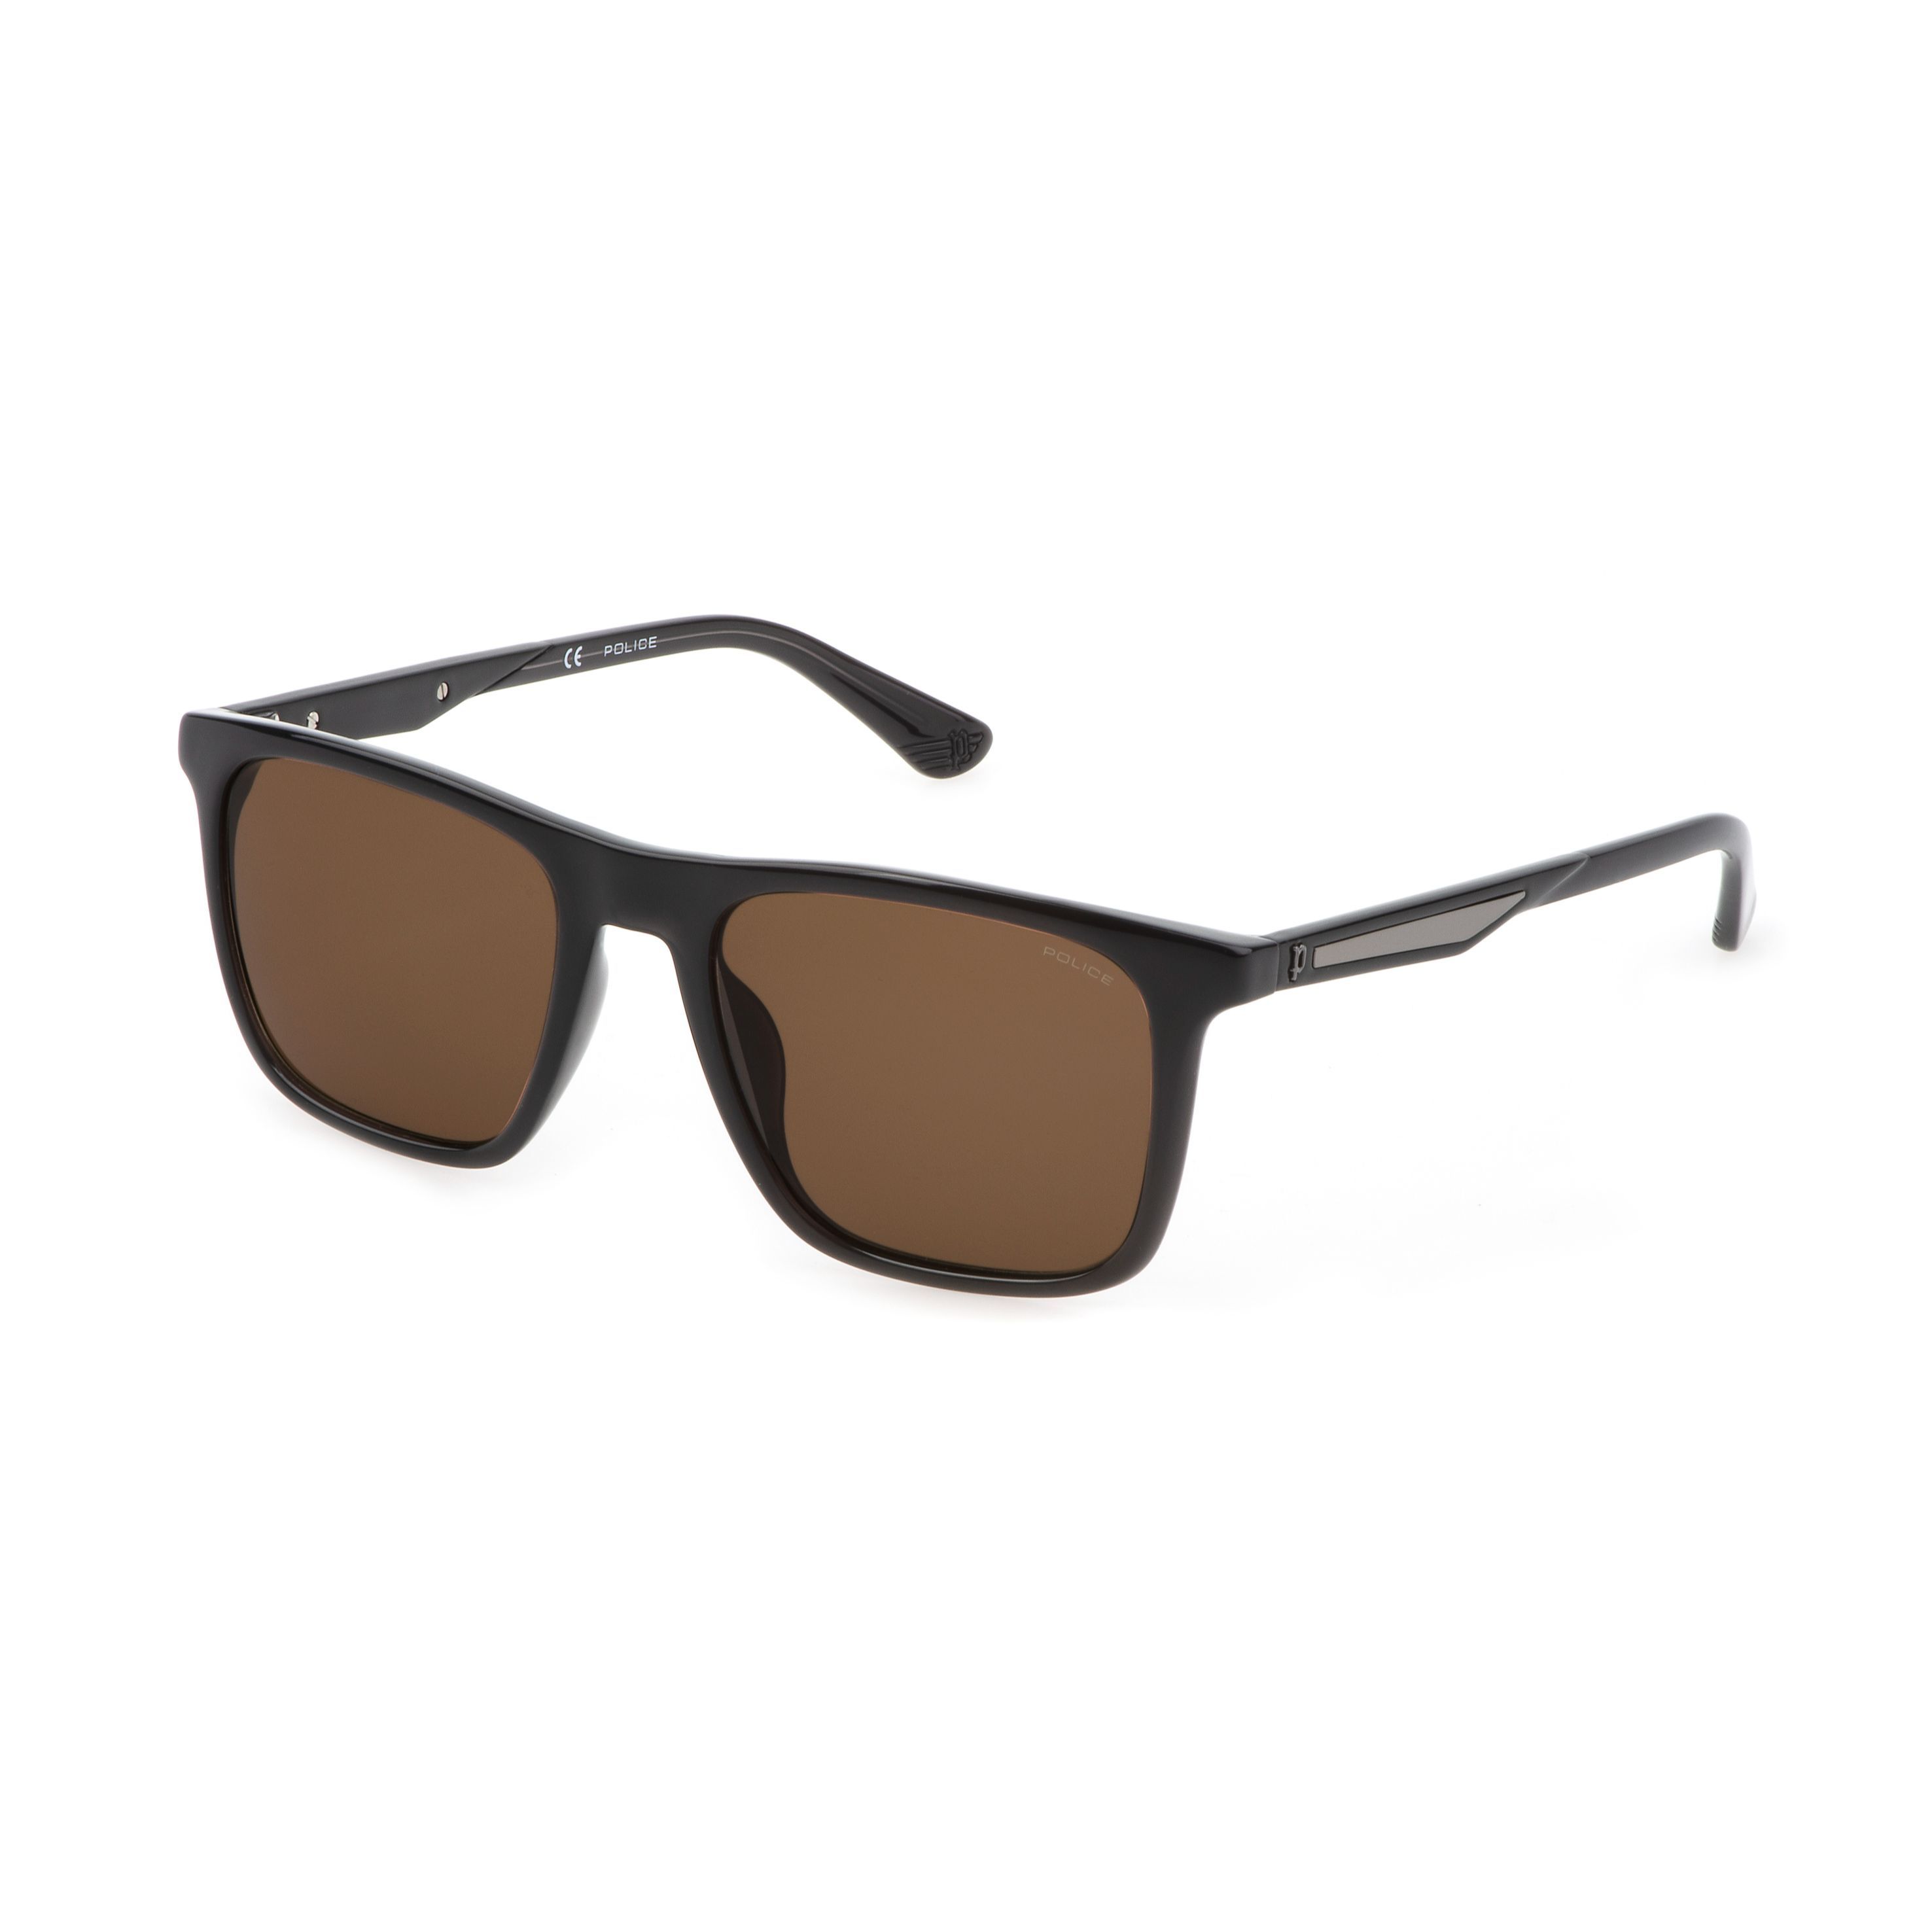 SPLF17M Square Sunglasses 705 - size 54